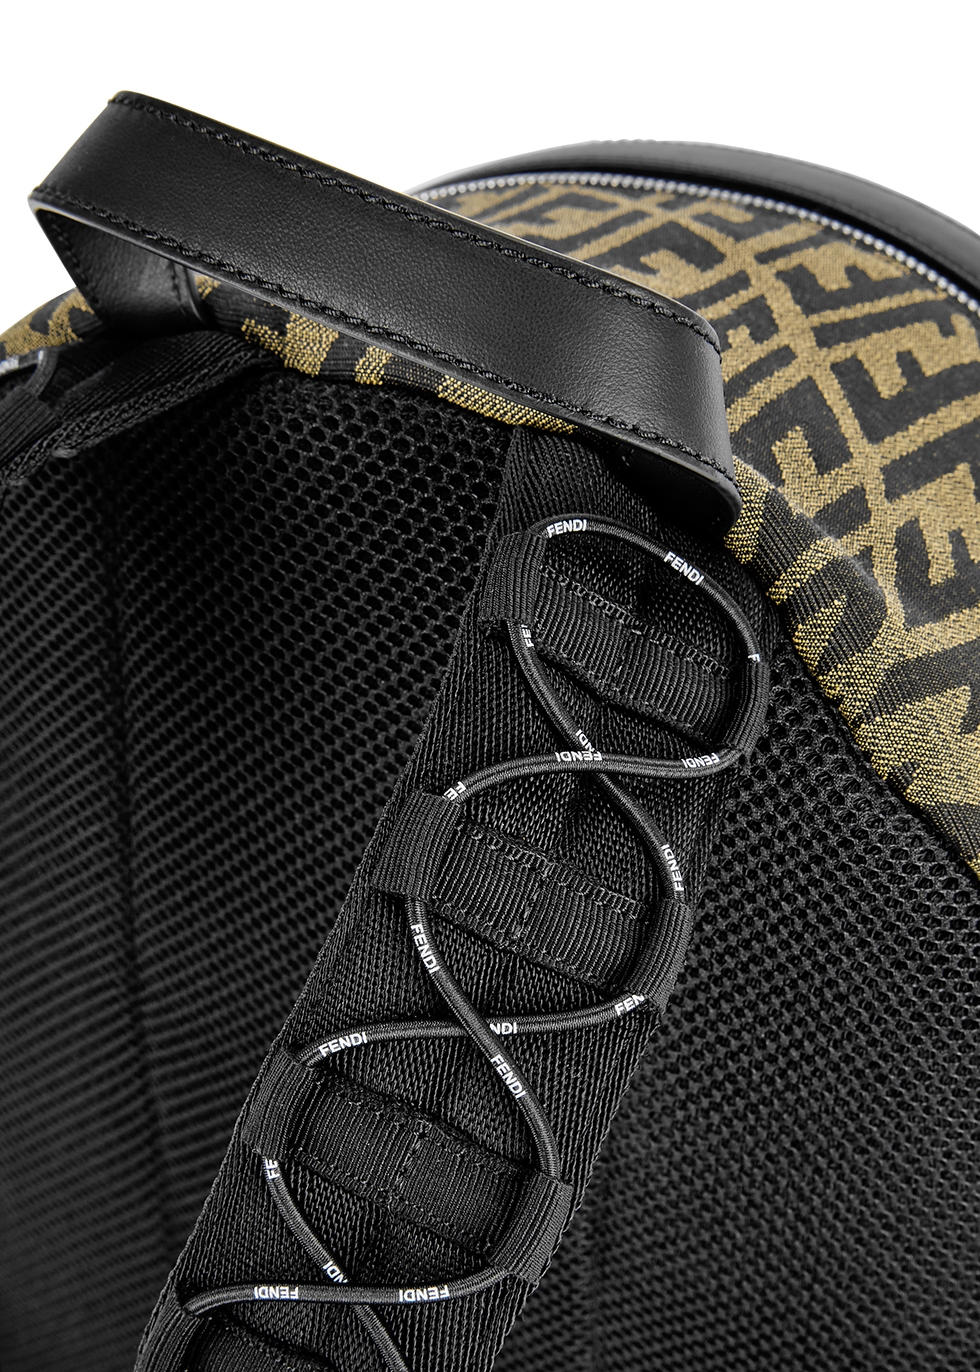 Fendi FF monogrammed canvas backpack - Harvey Nichols